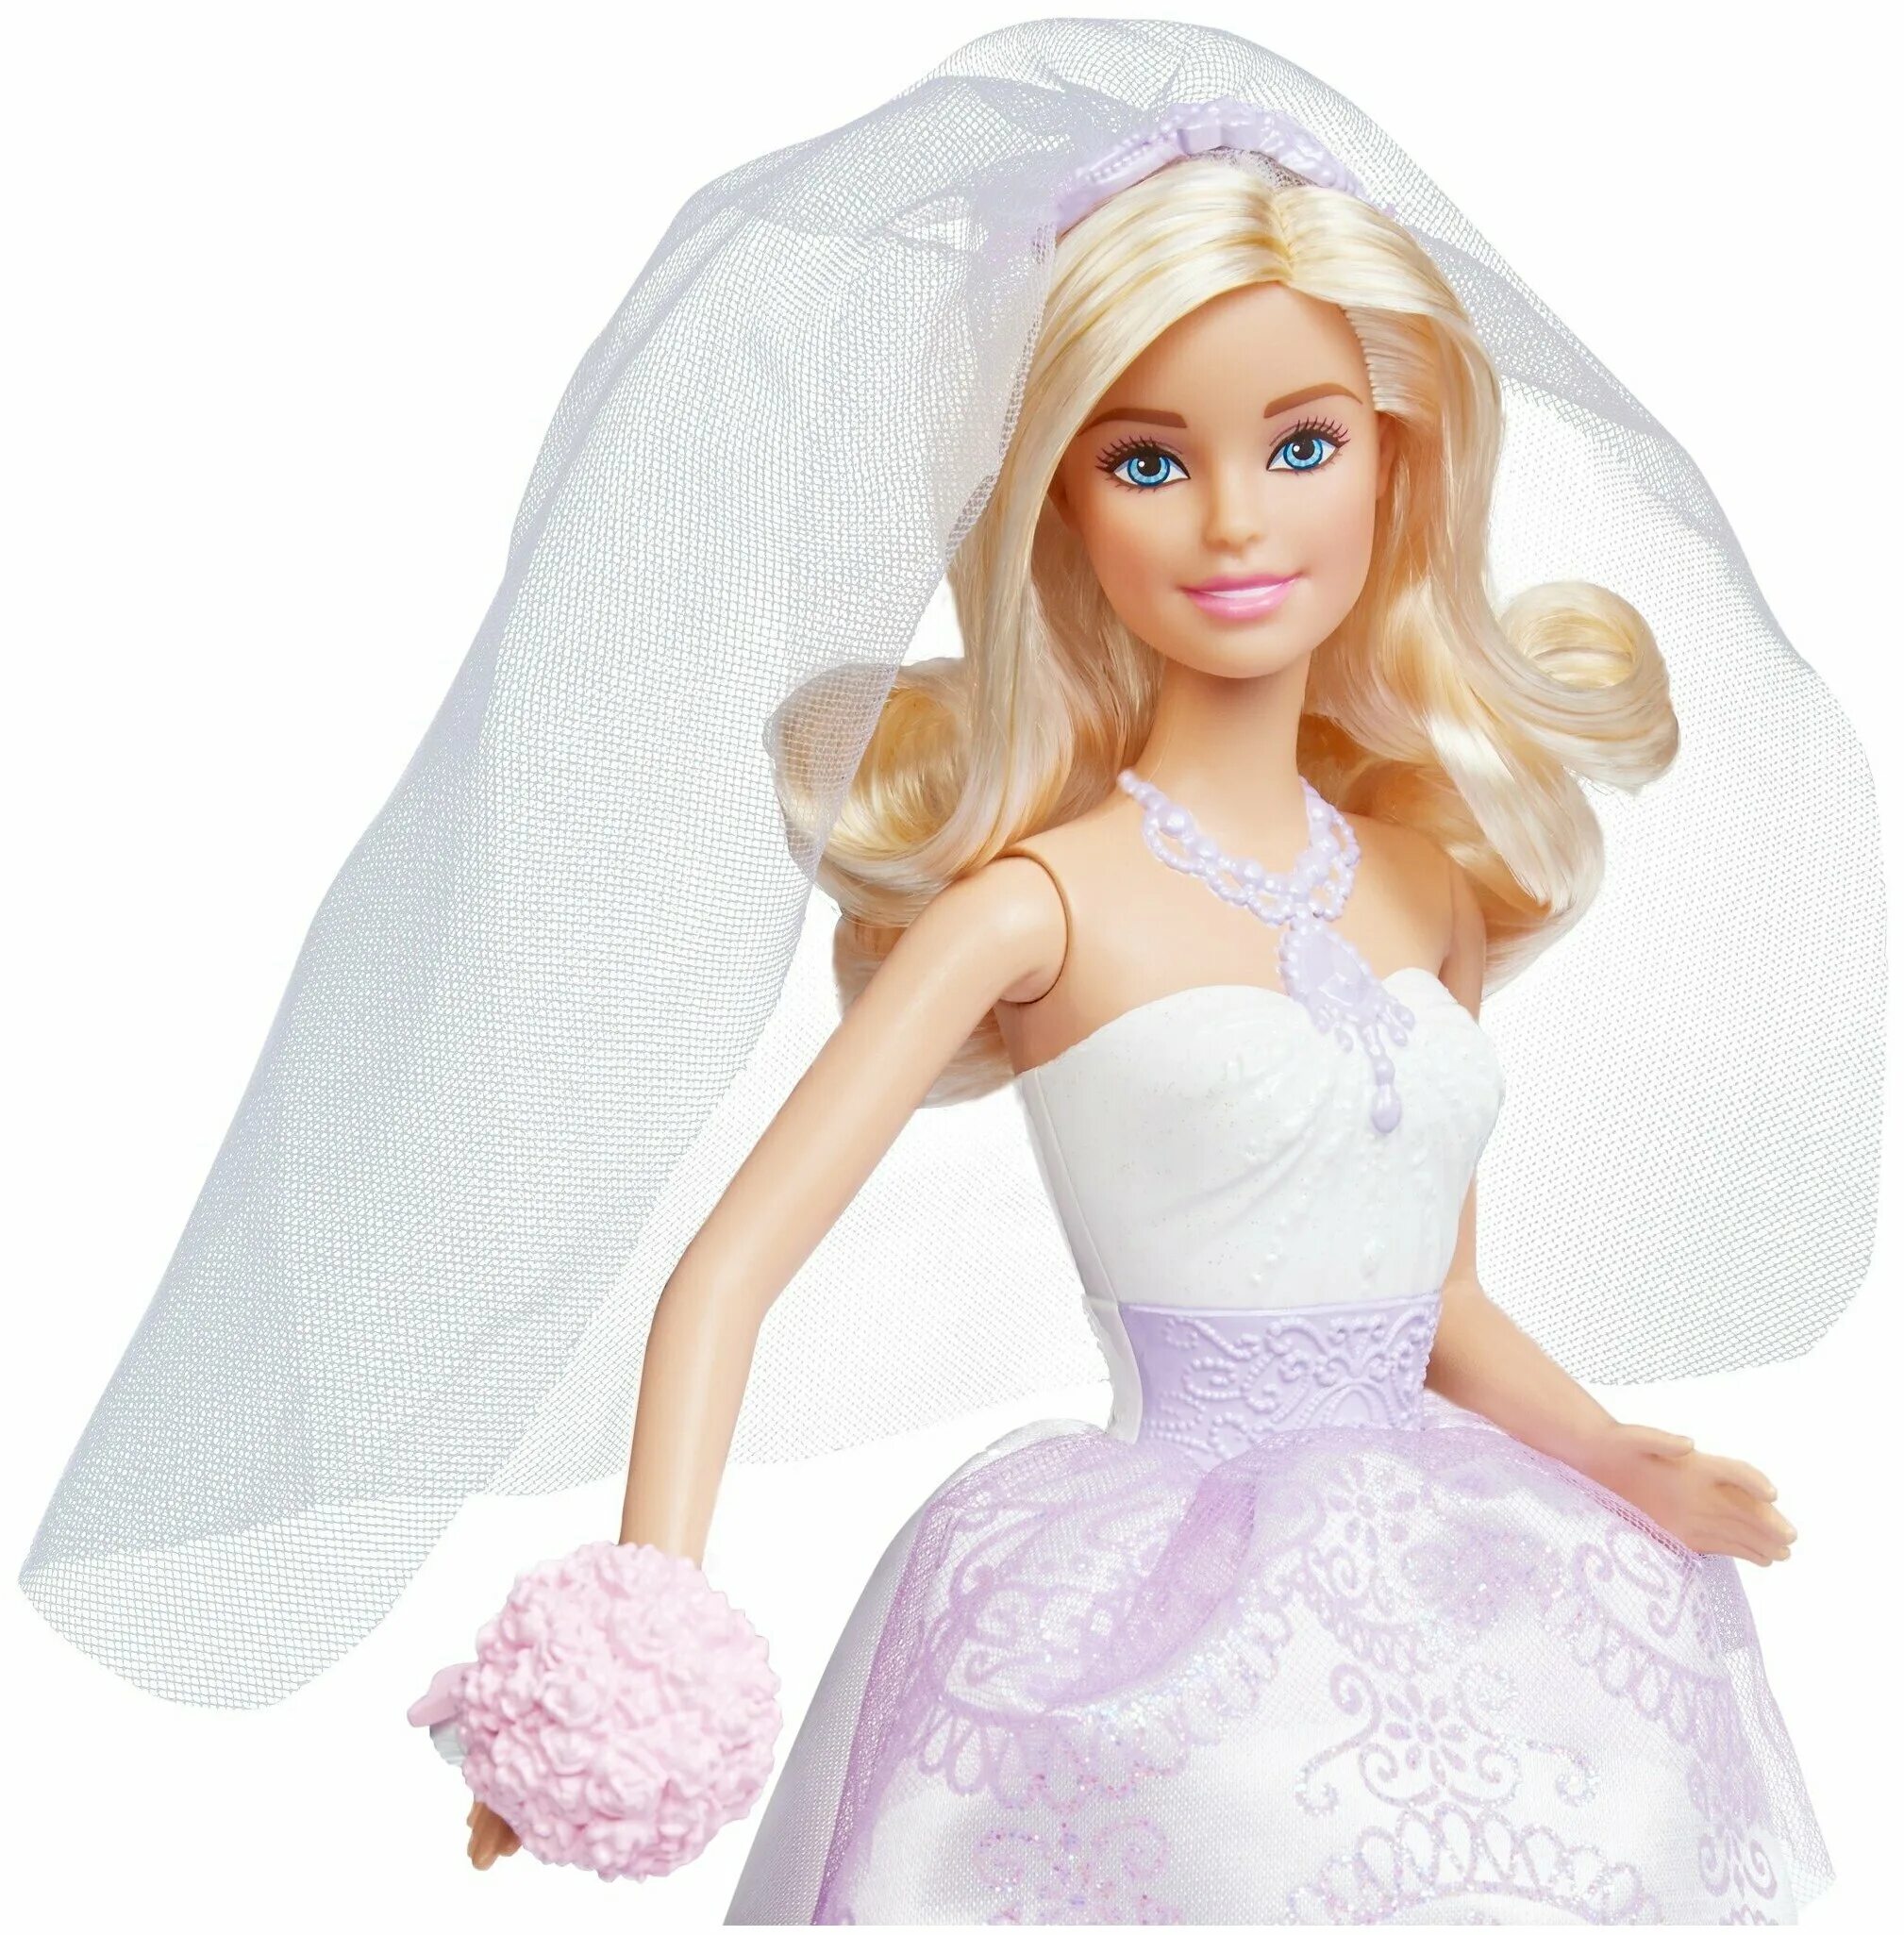 Купить куклу невесту. Барби Сказочная невеста. Барби невеста dhc35. Кукла Барби невеста Маттел. Кукла Barbie Сказочная невеста.